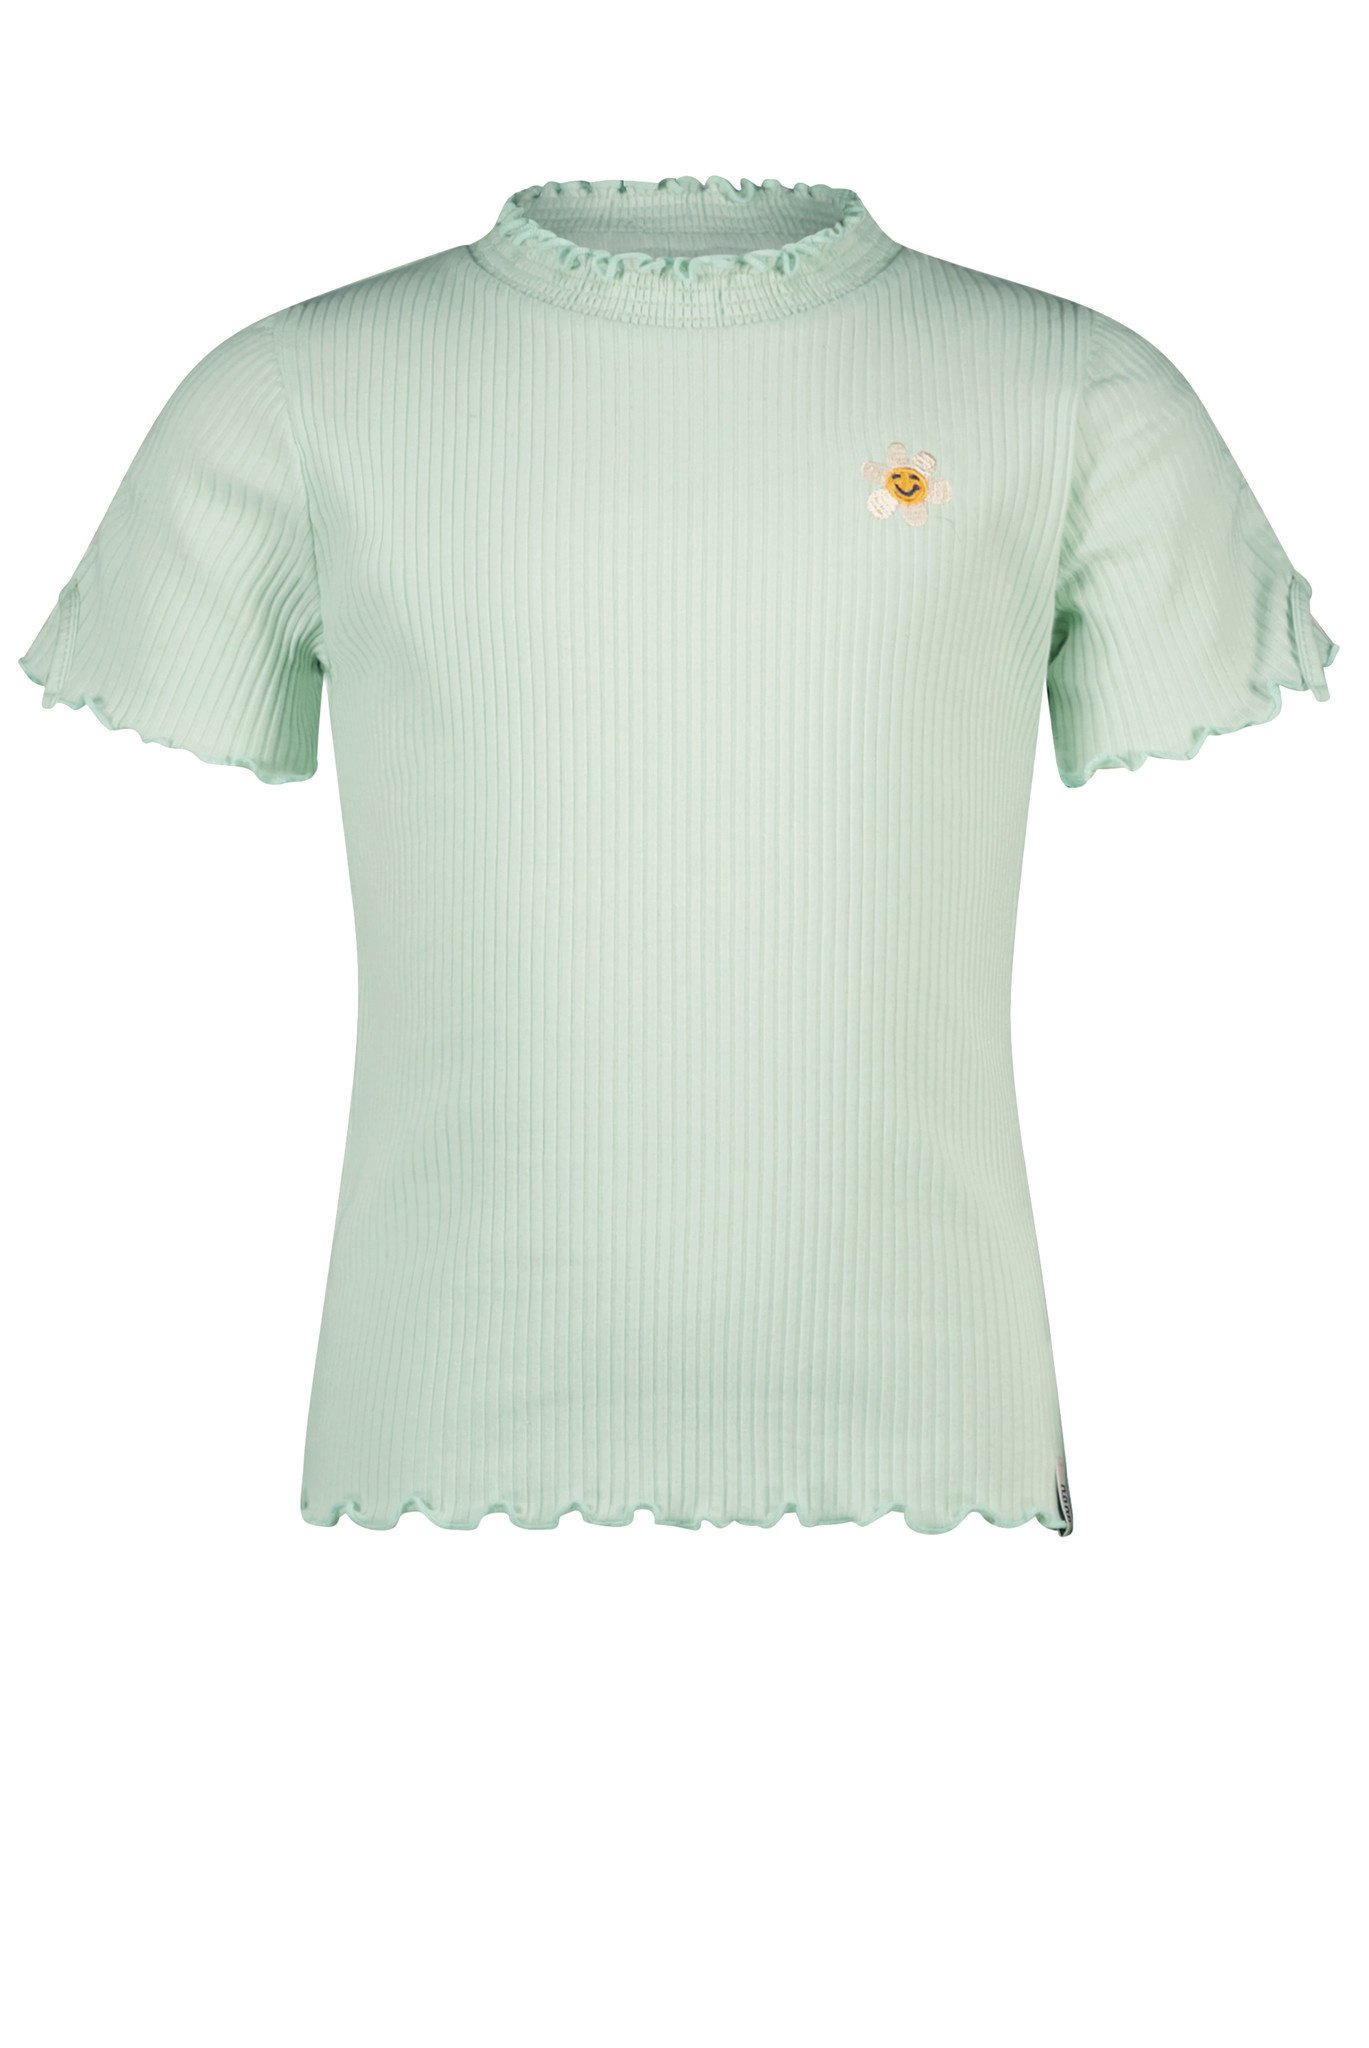 NONO - T-Shirt - Cream Mint - Maat 122-128